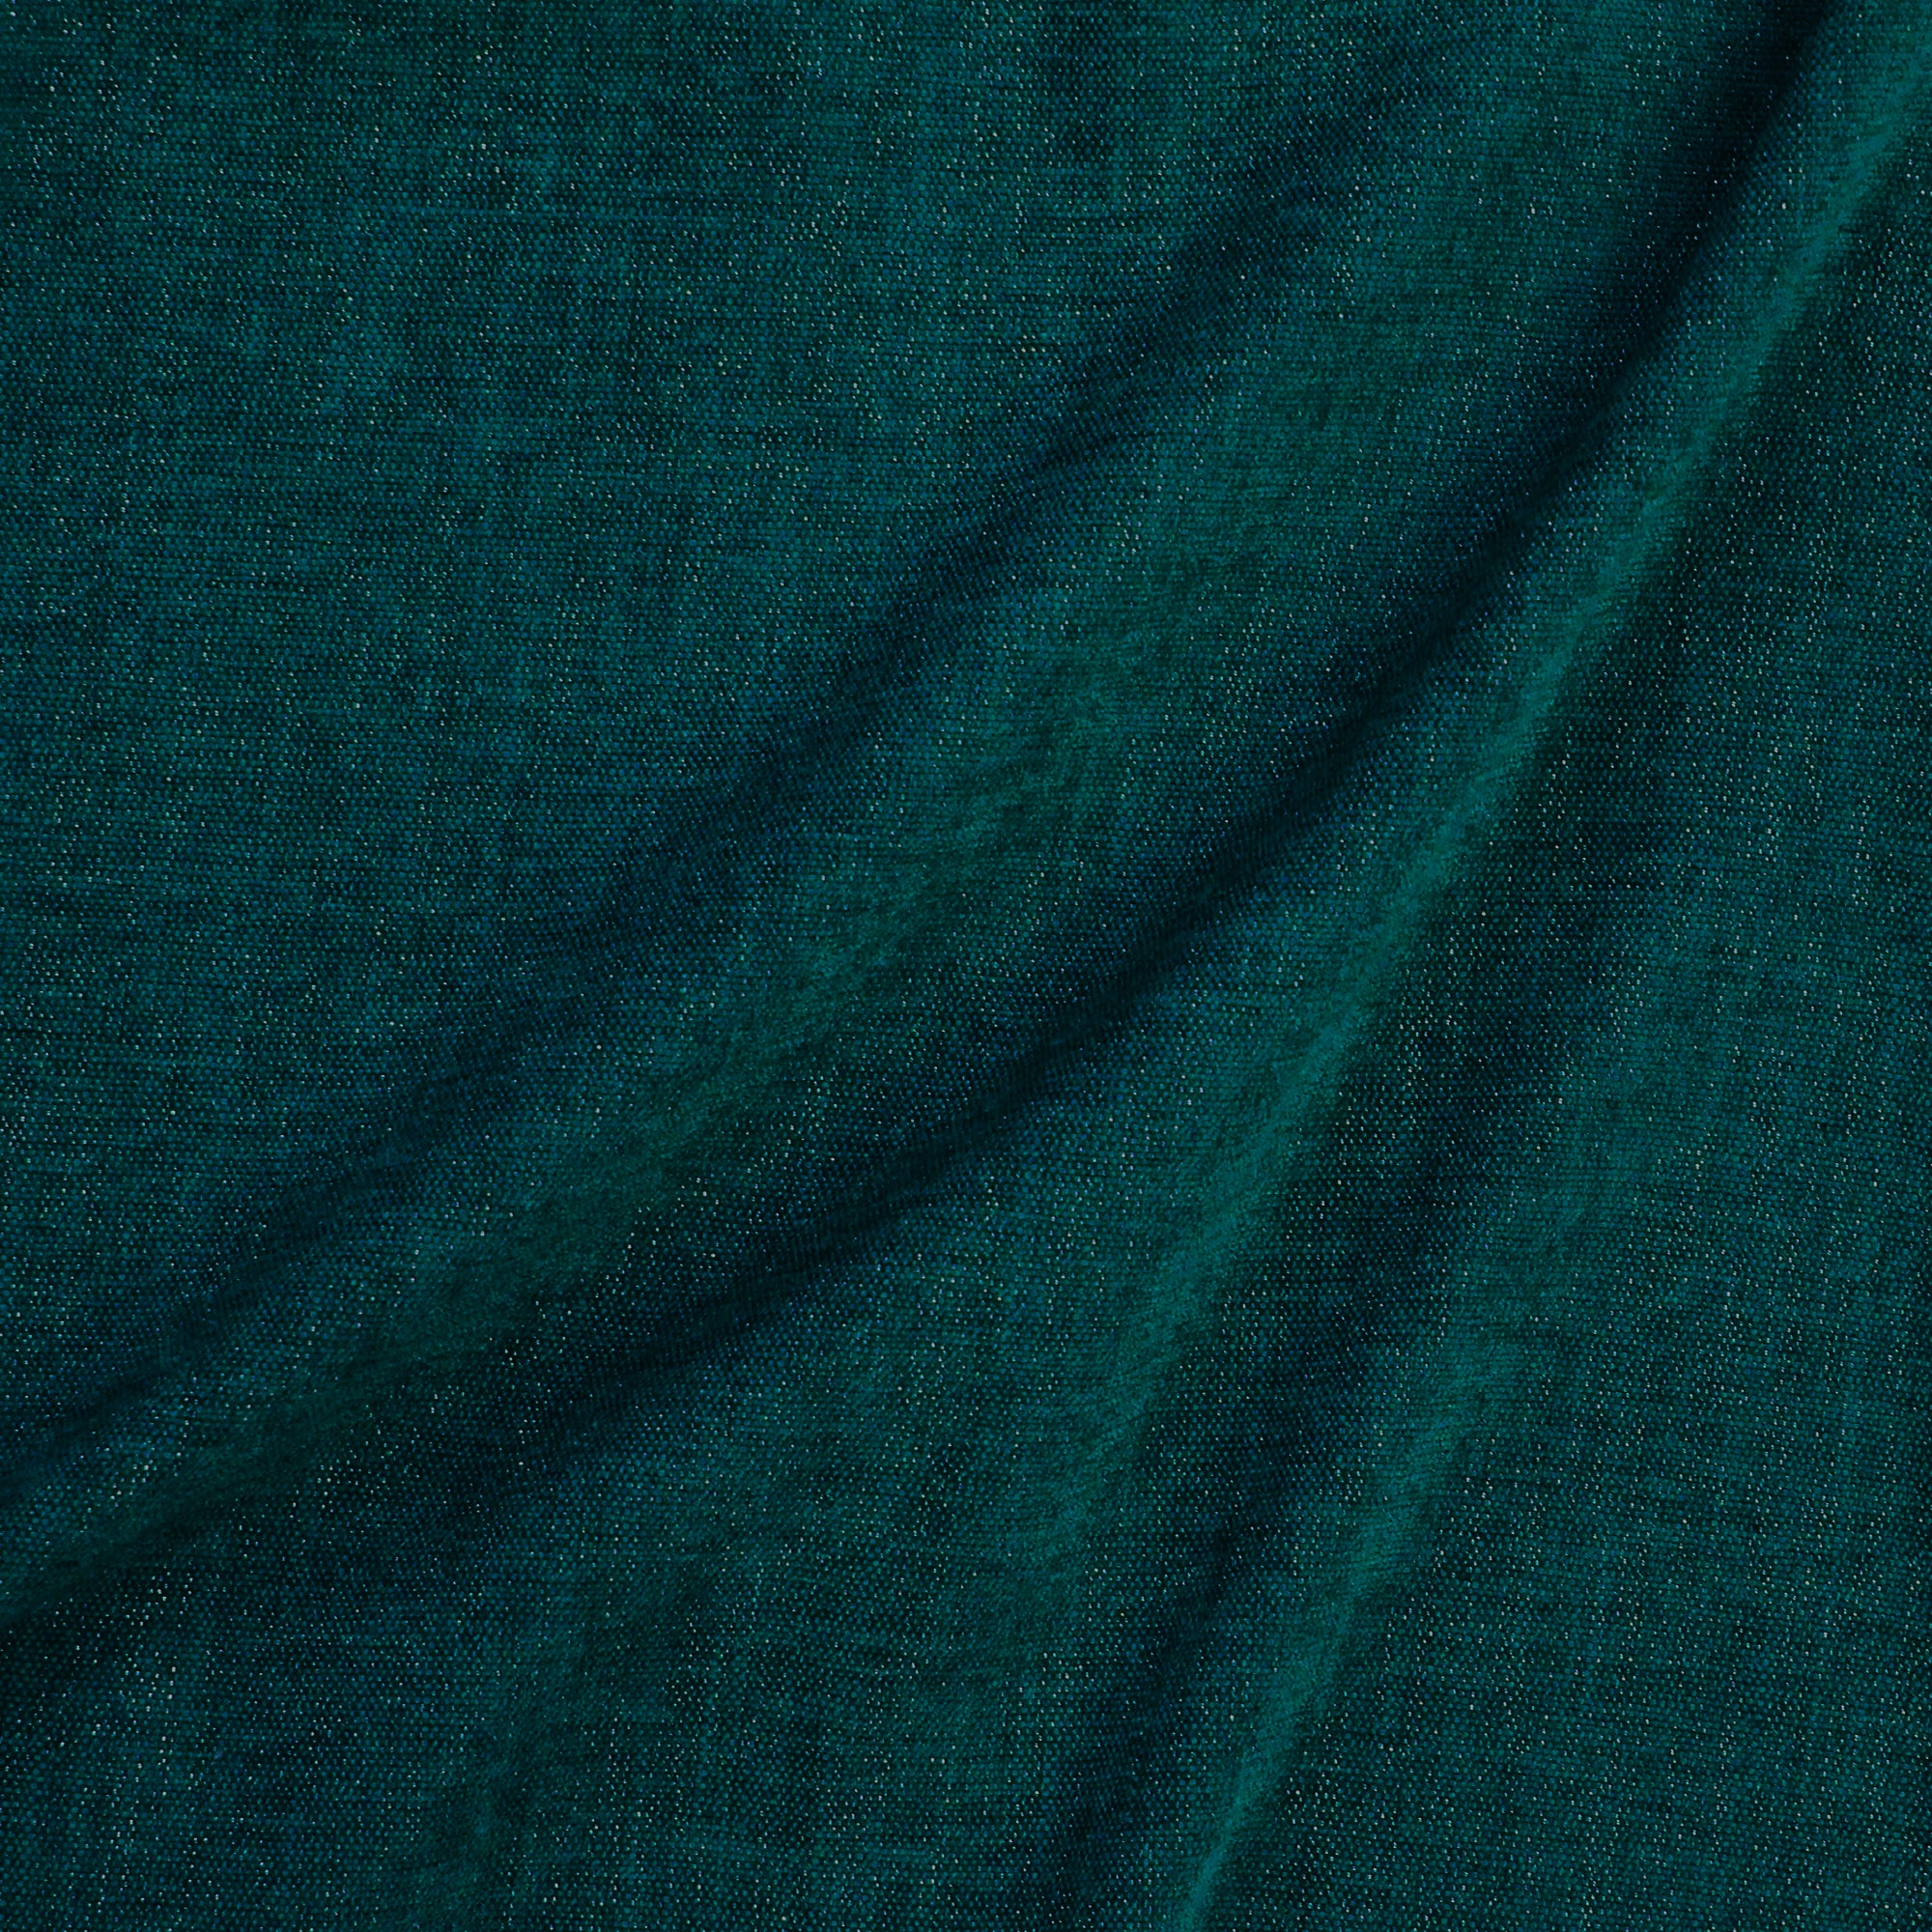 Pandora Fabric | Textured Linen Look (New Colors)